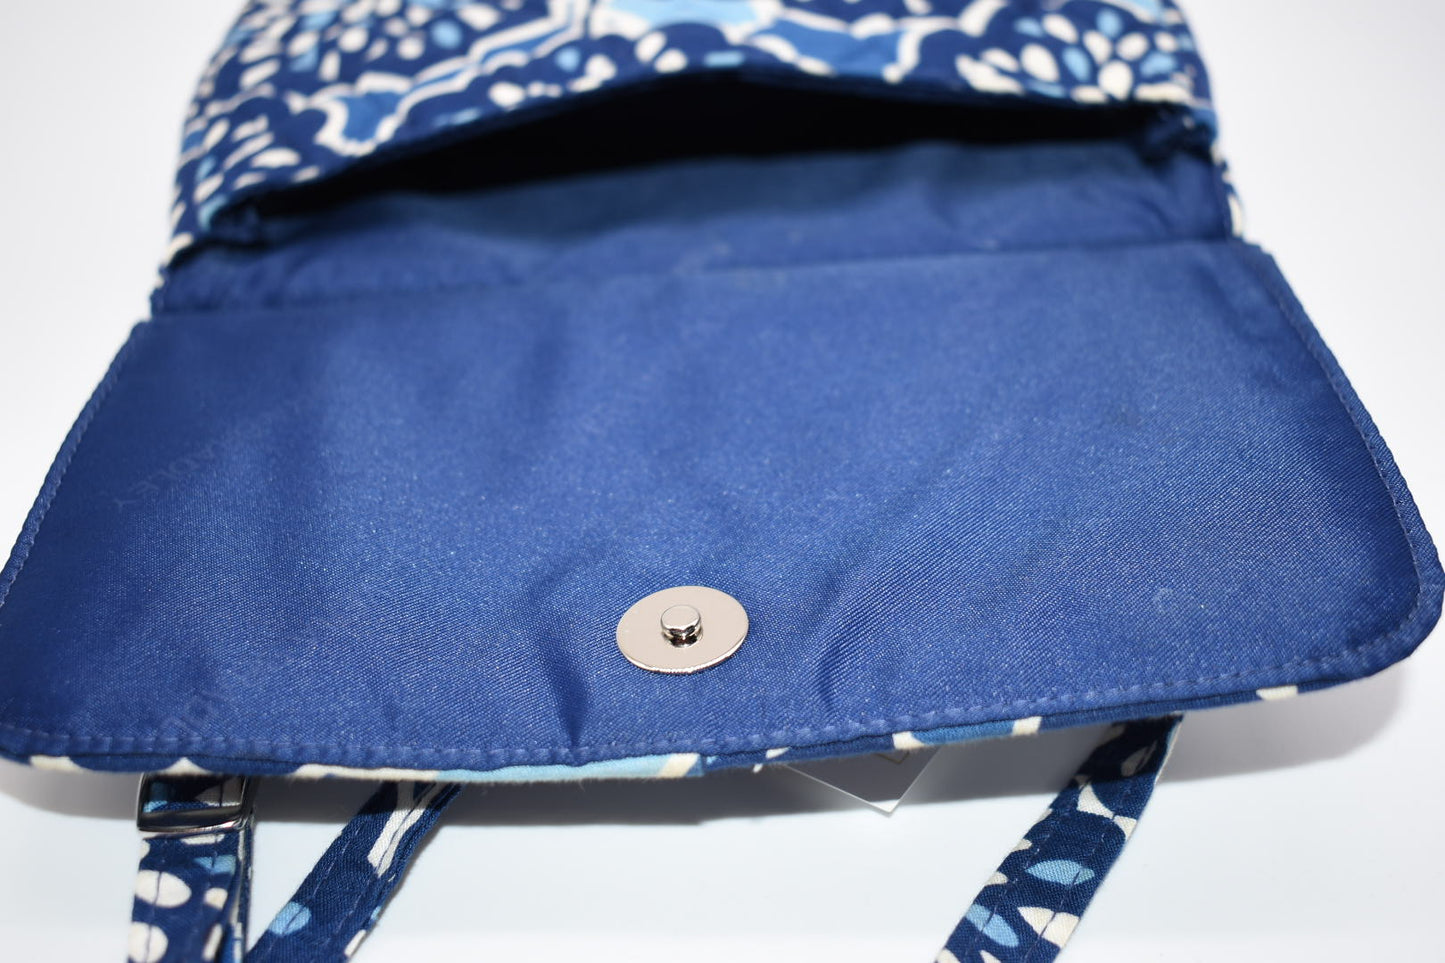 Vera Bradley Petite Crossbody Bag in "Petal Splash" Pattern